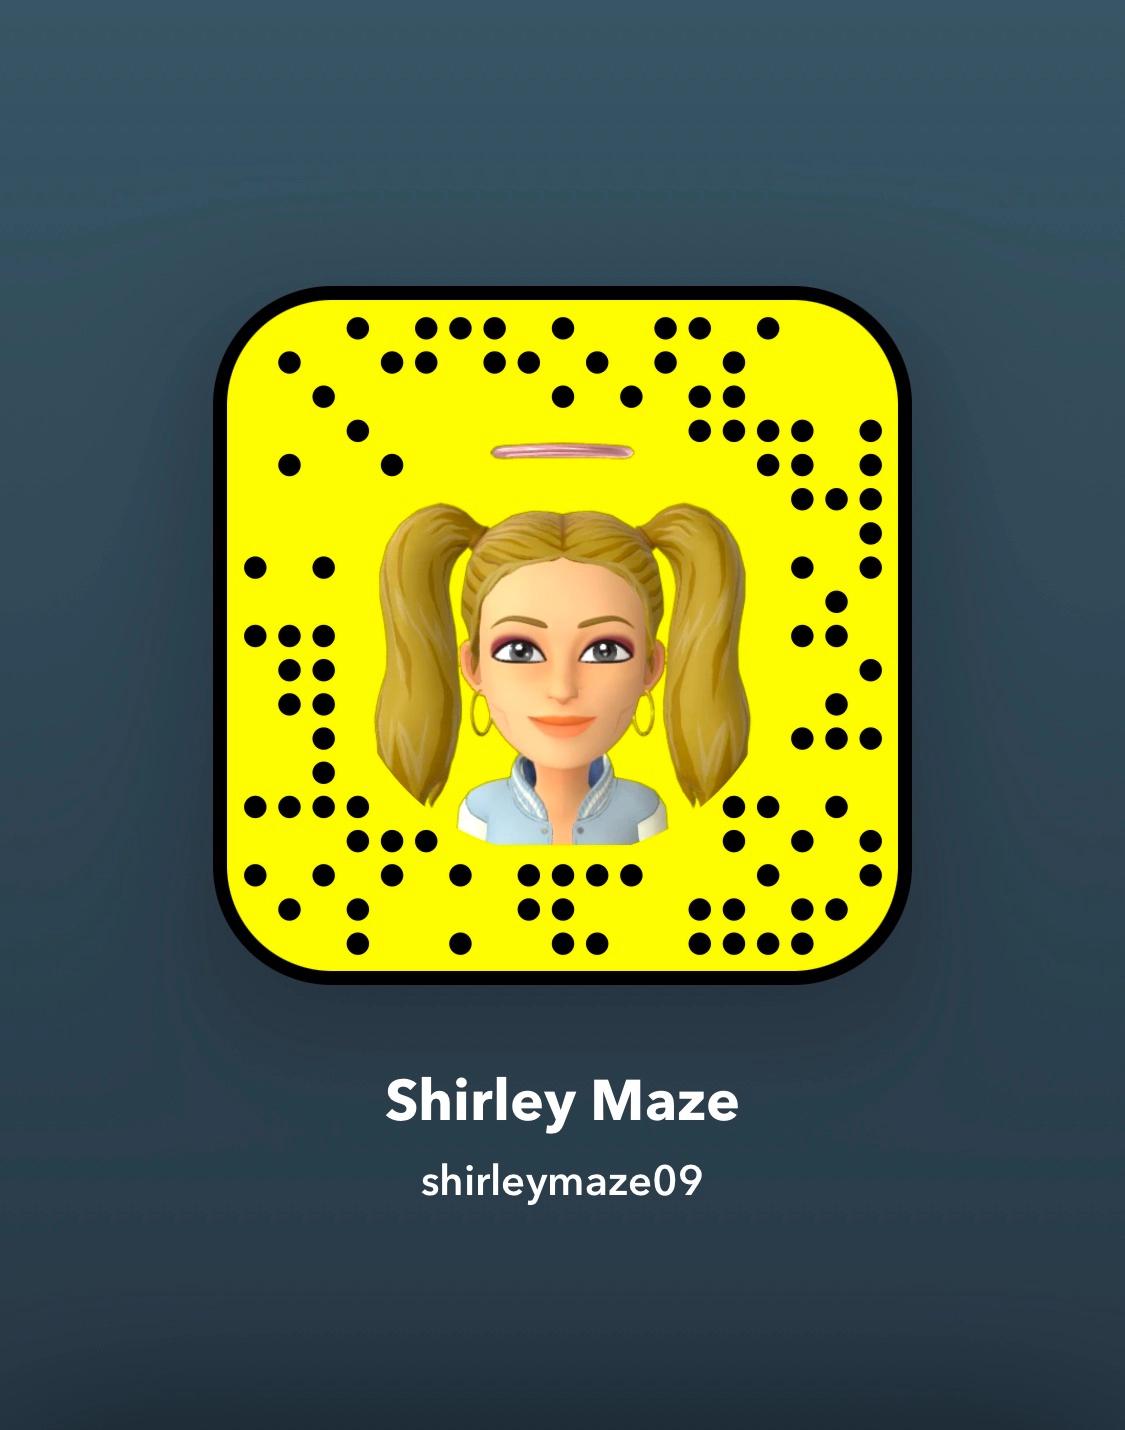 I’m down to fuck 🍆💦👅 snap Shirleymaze09